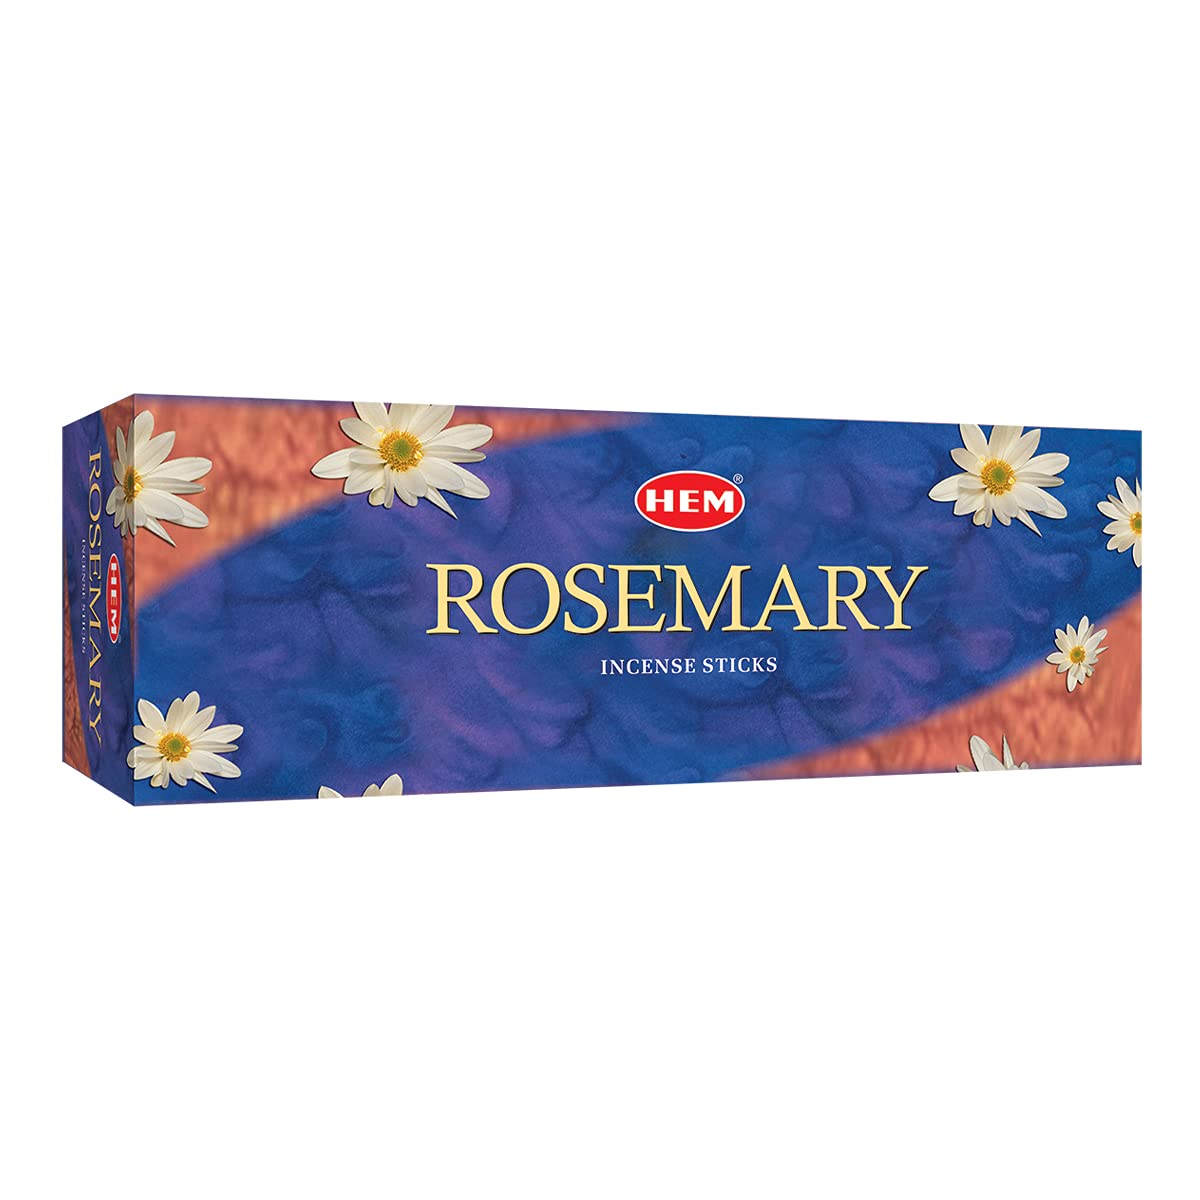 HEM Rosemary Incense Sticks - 120 Sticks